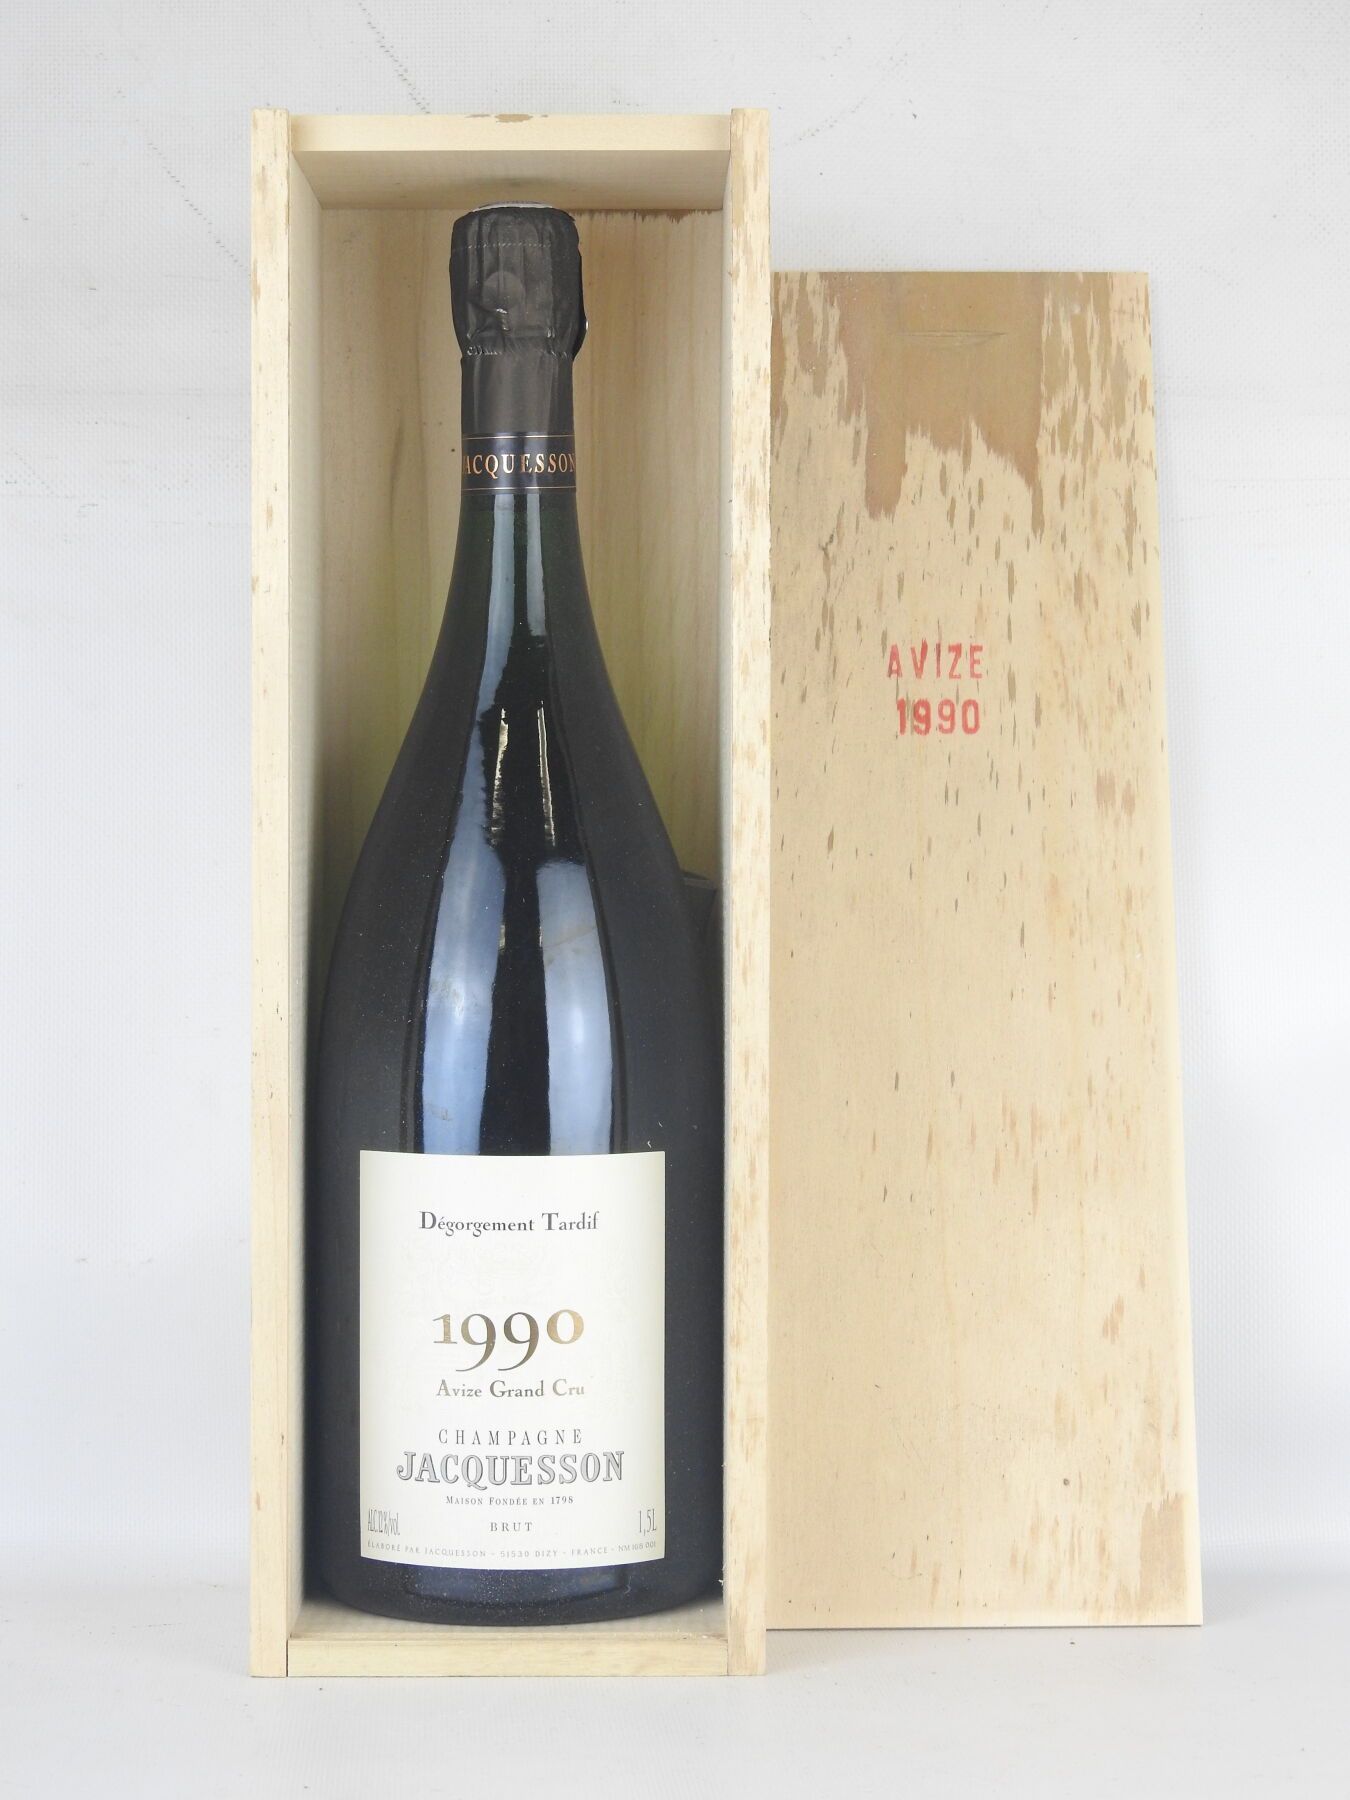 Null 1 magnum Jacquesson degorgement tardif 1990香槟。木盒包装。